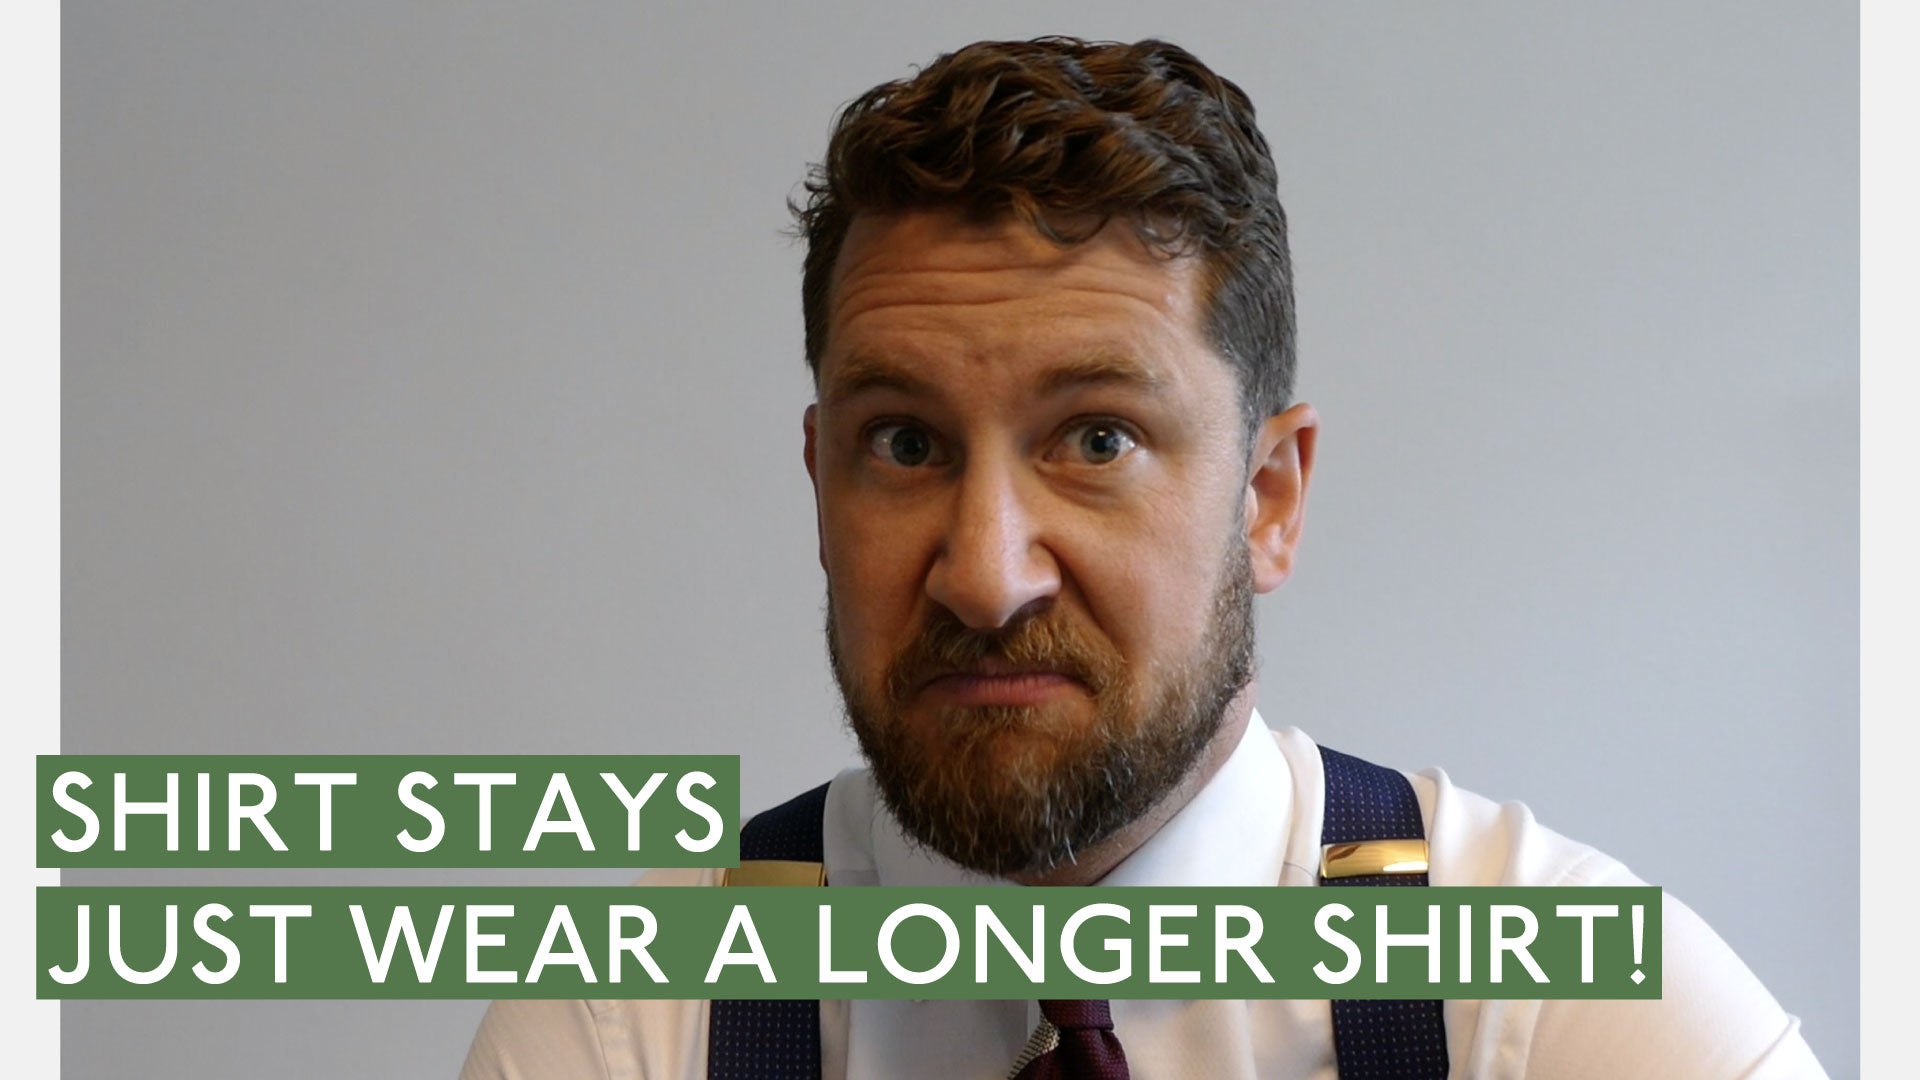 Shirt Stays - Why Not Buy Longer Shirts?